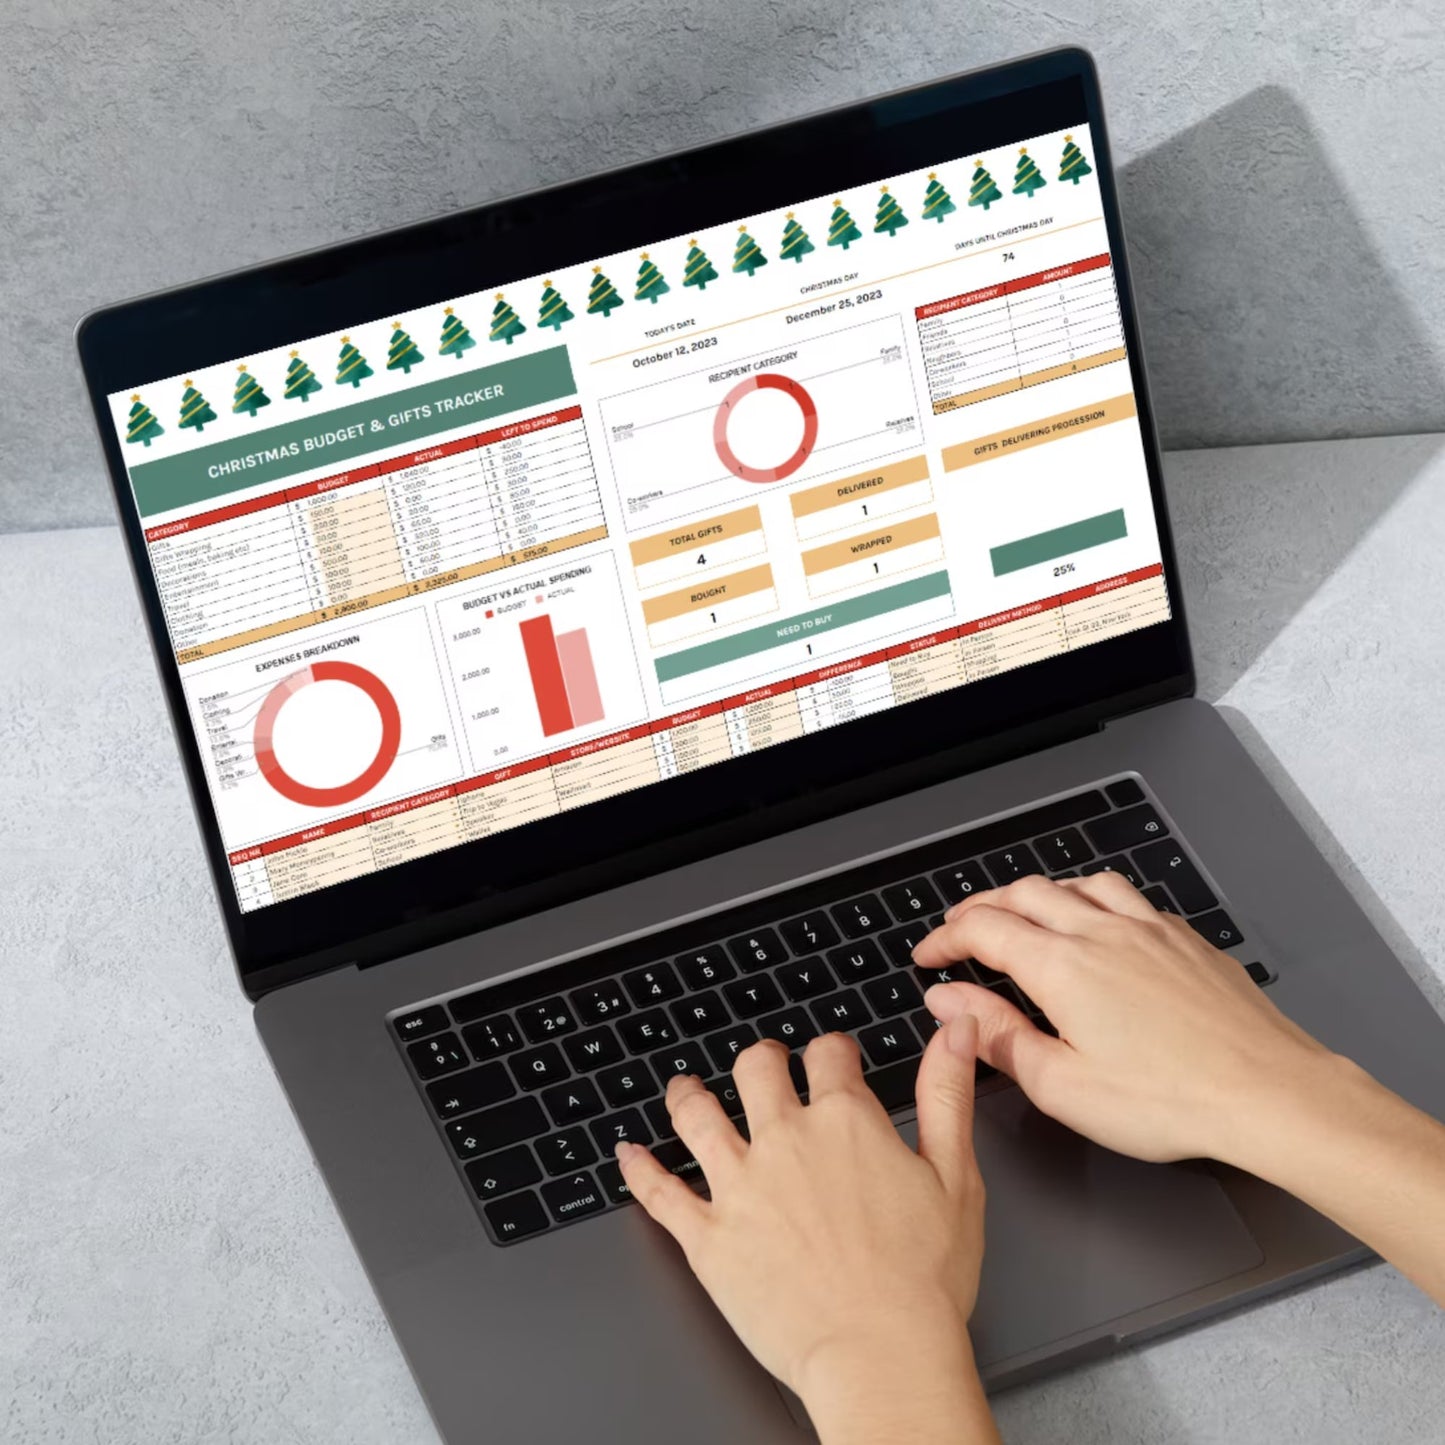 Digital Christmas Planner Spreadsheet for Google Sheets - Print It Baby